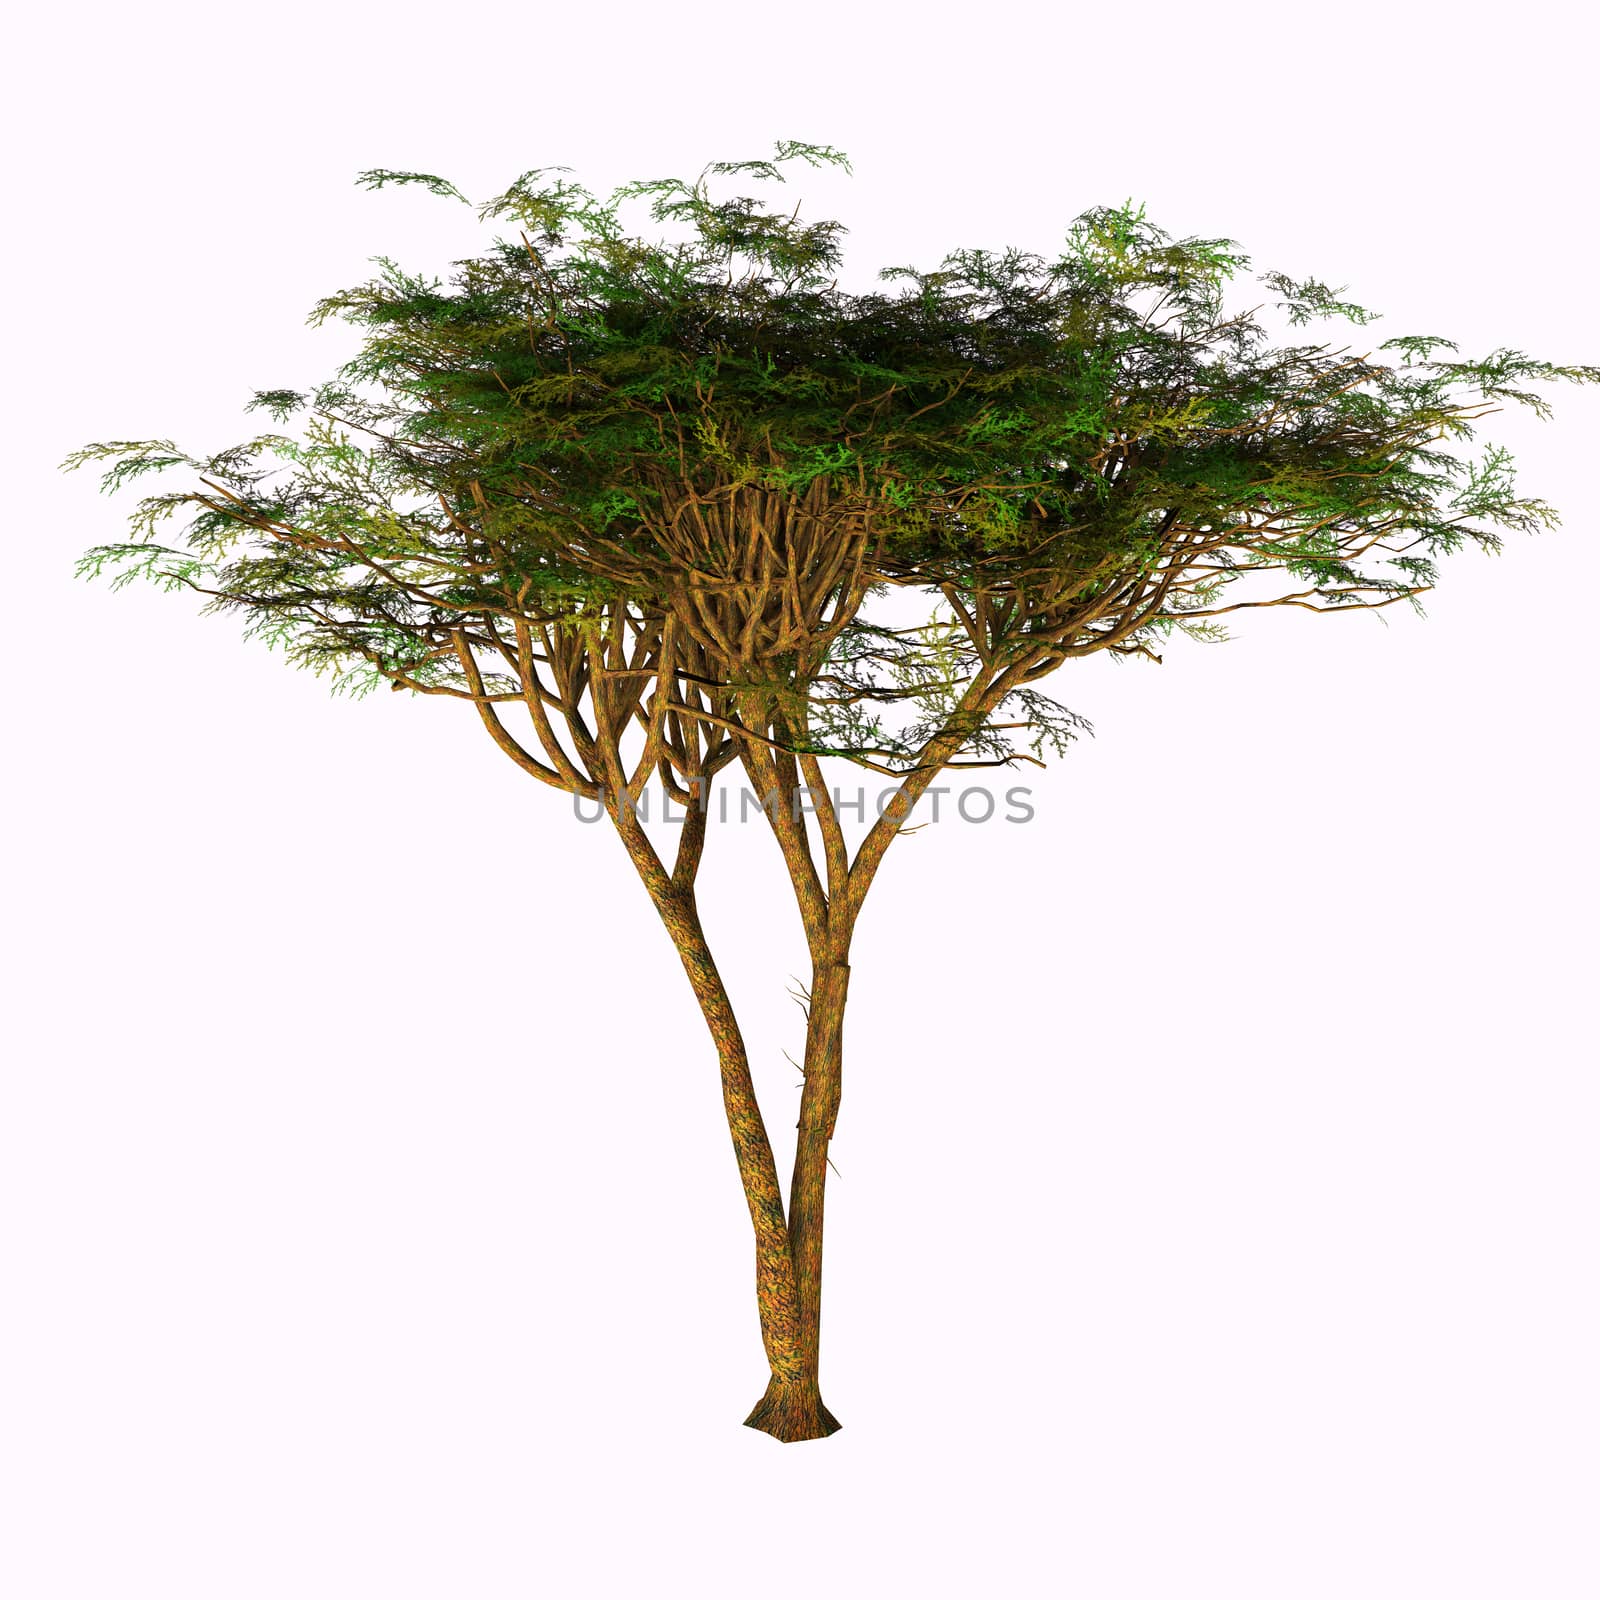 Umbrella Acacia Tree by Catmando